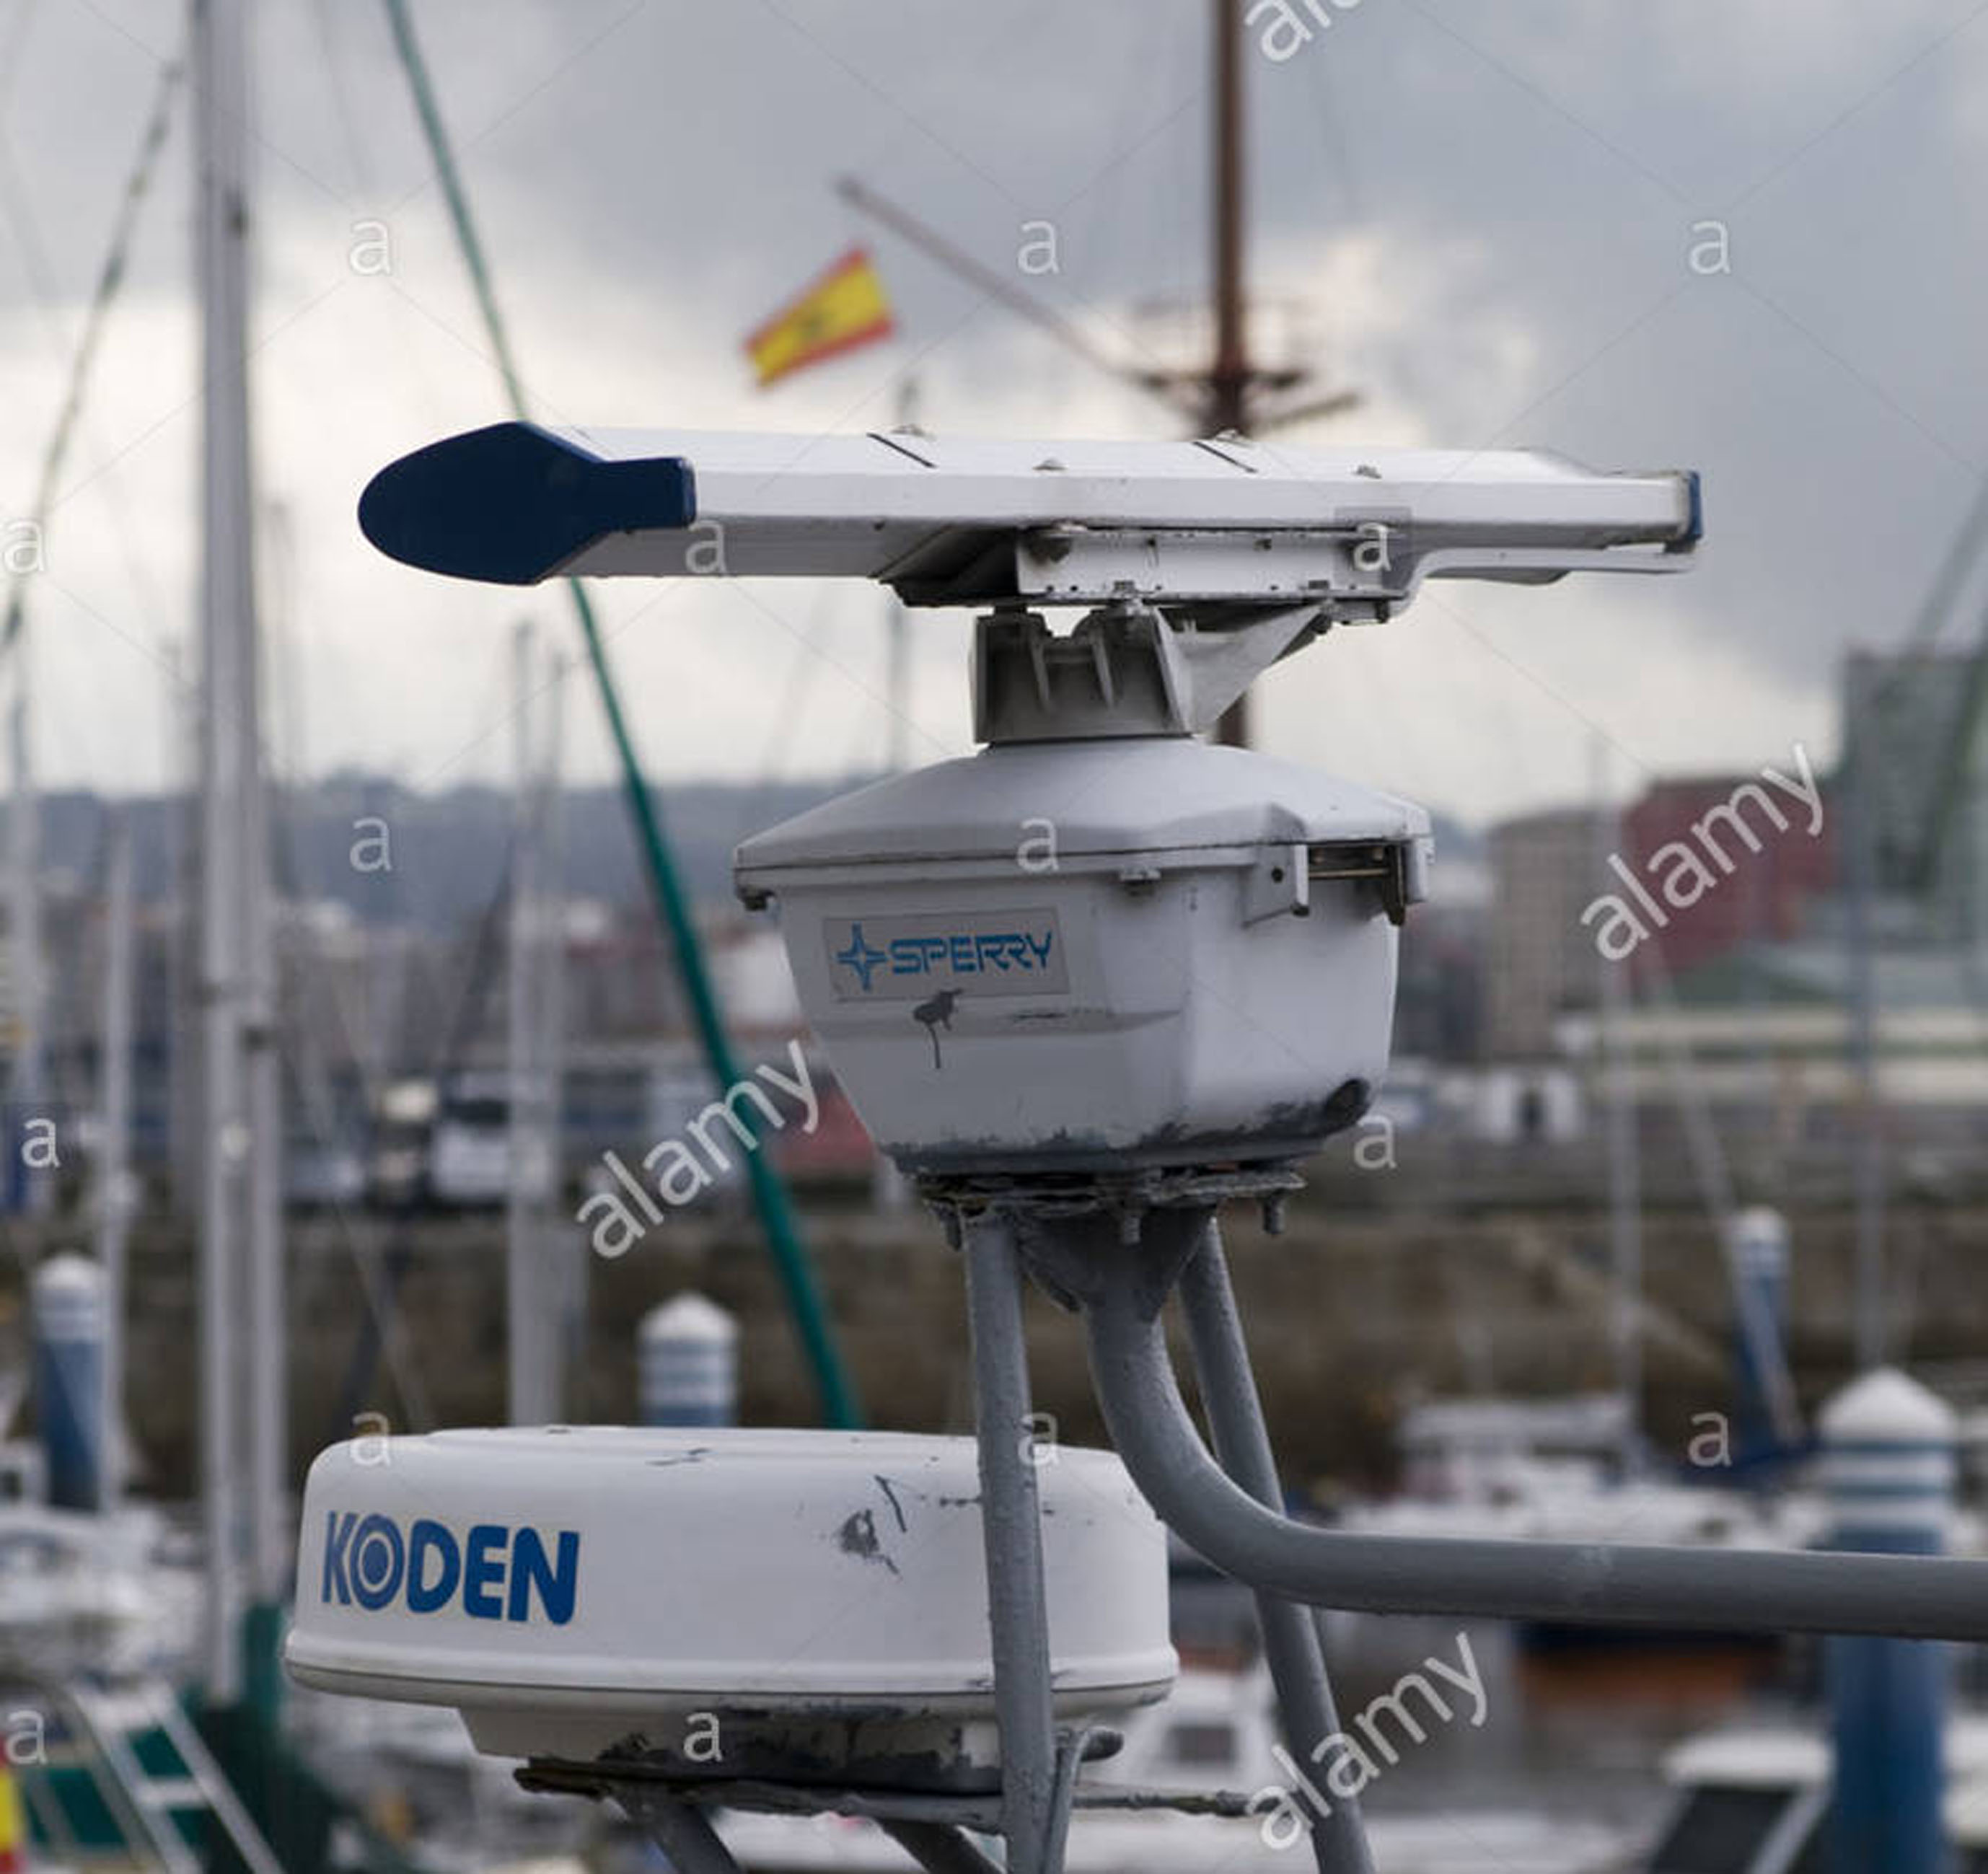 Sperry Mk-740 radar boat-BAD0WP.jpg